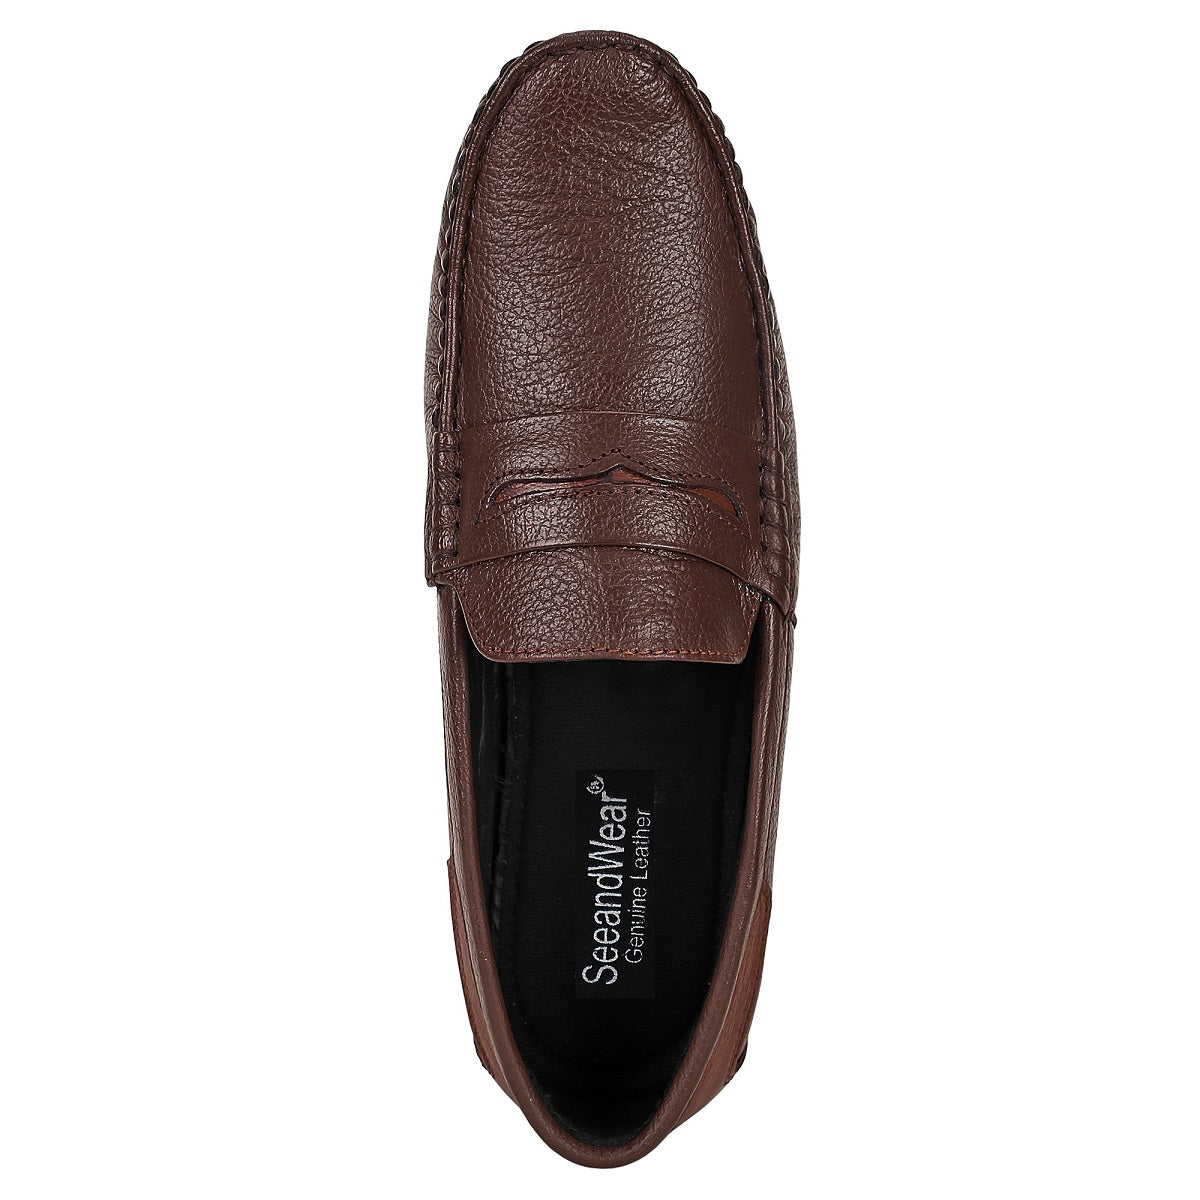 SeeandWear Leather Loafers for Men